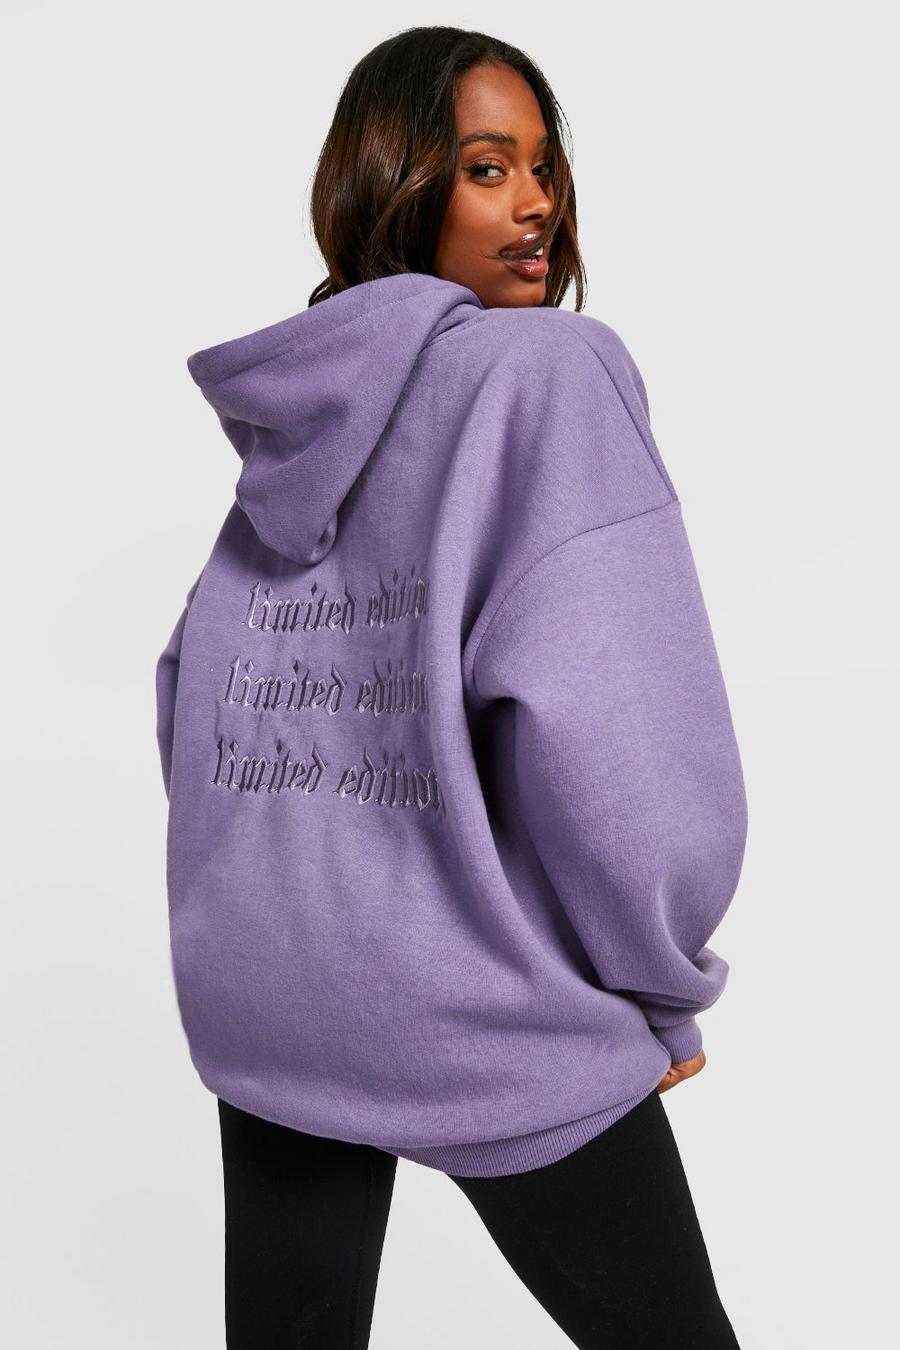 https://media.boohoo.com/i/boohoo/gzz28917_purple_xl/female-purple-3d-embroidered-oversized-hoodie-/?w=900&qlt=default&fmt.jp2.qlt=70&fmt=auto&sm=fit